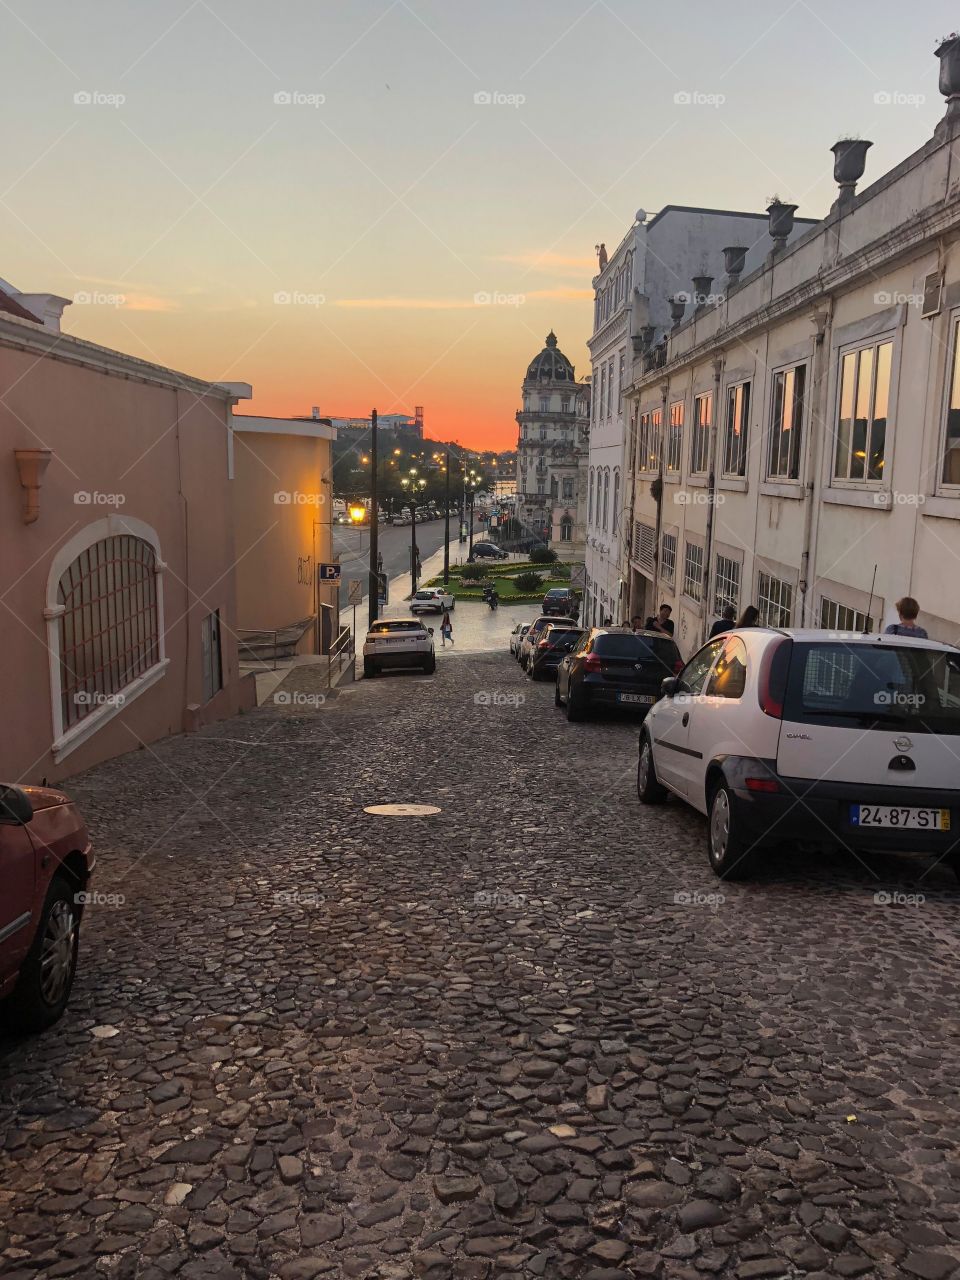 Coimbra Almedina ‘s beautiful sunset